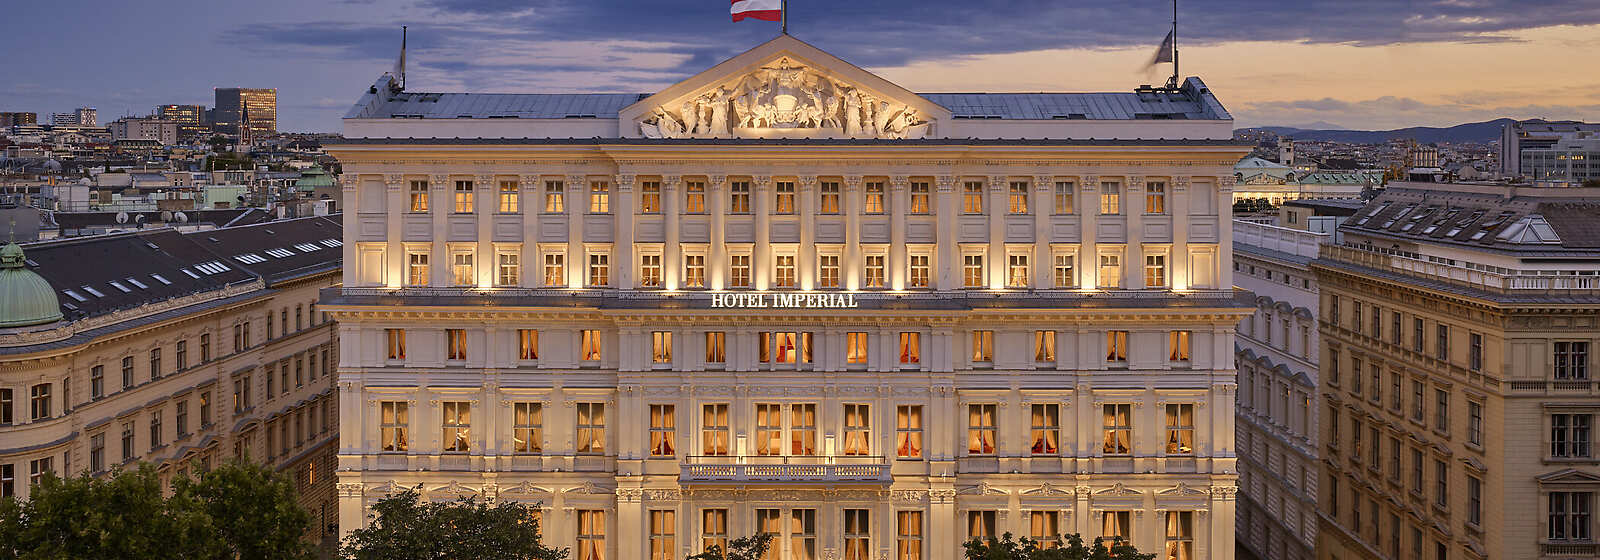 Hotel Imperial Vienna - evening exterior picture